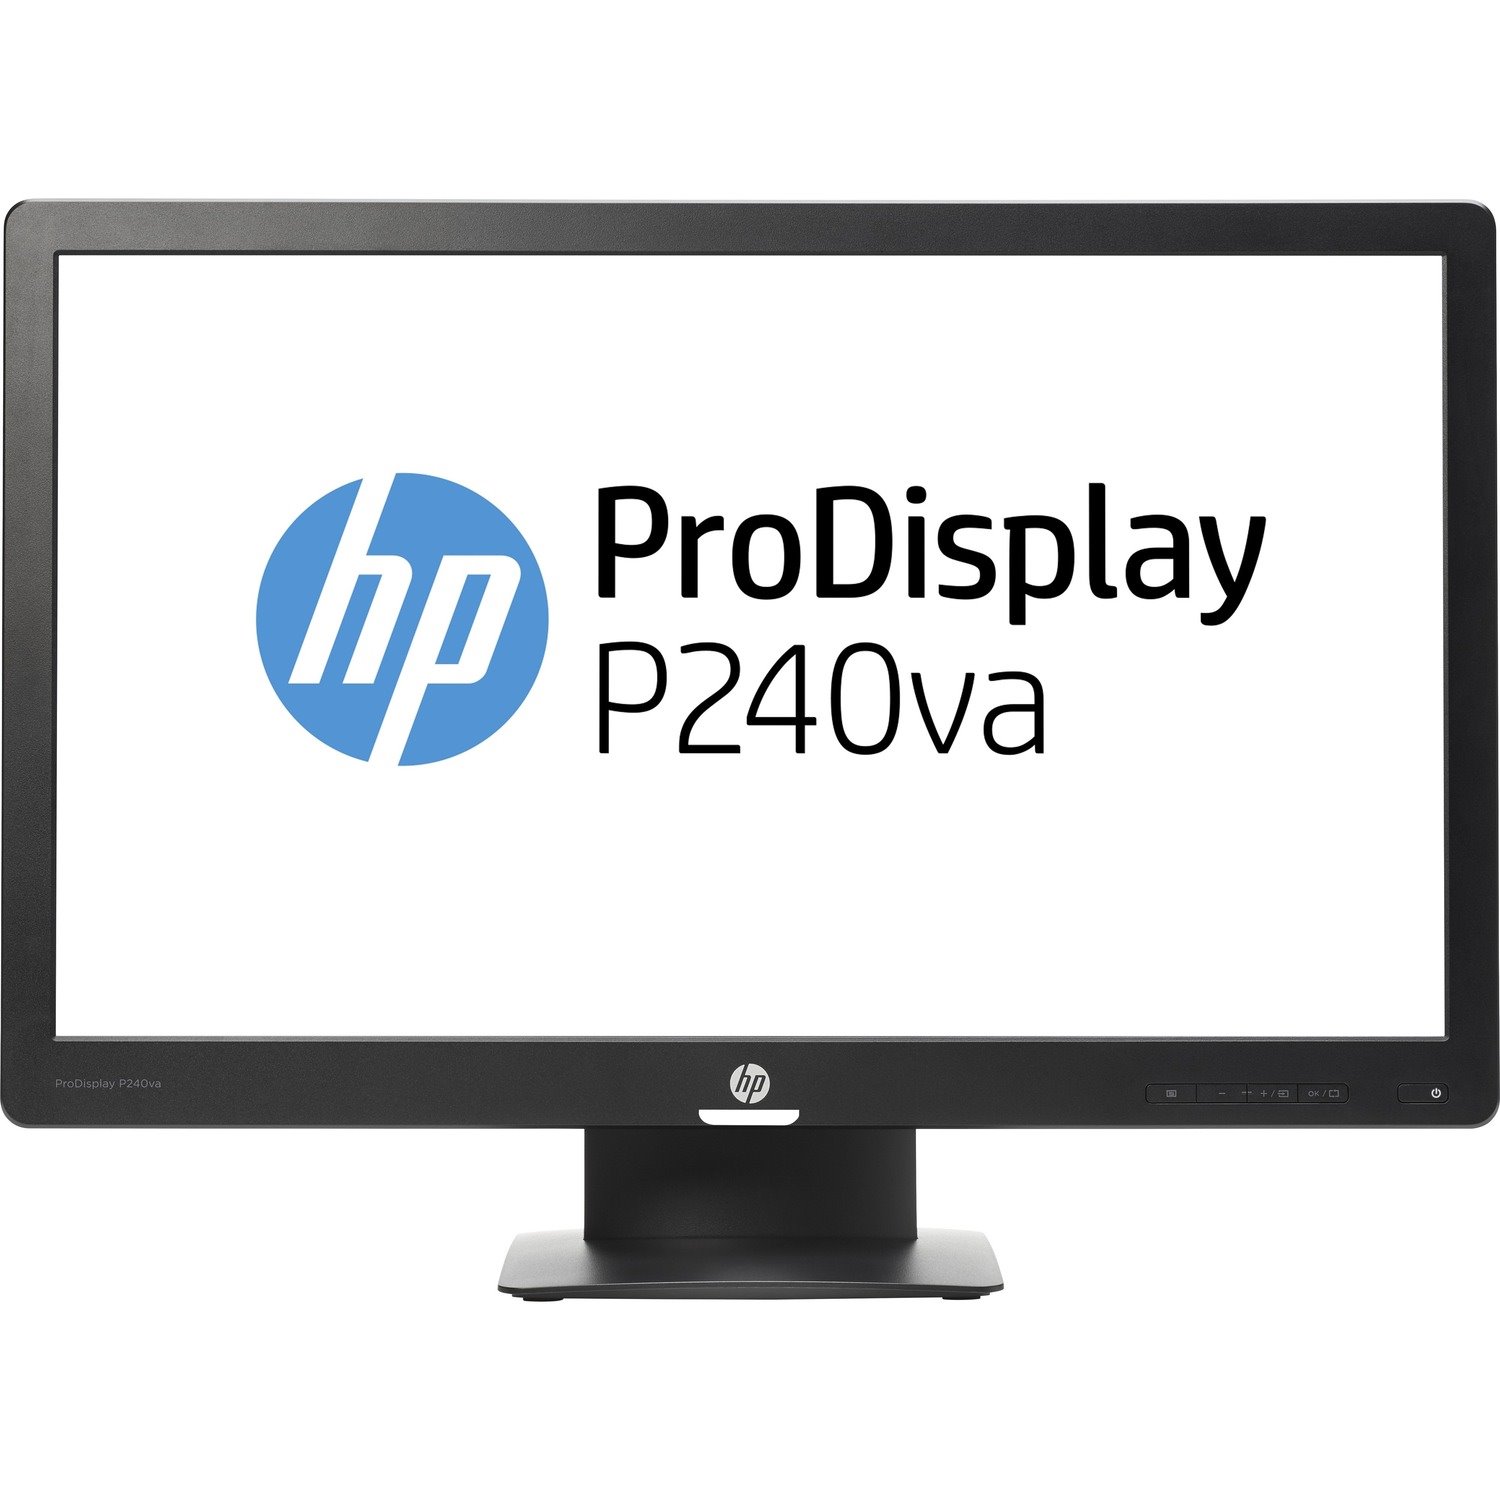 HP Business P240va Full HD LCD Monitor - 16:9 - Black